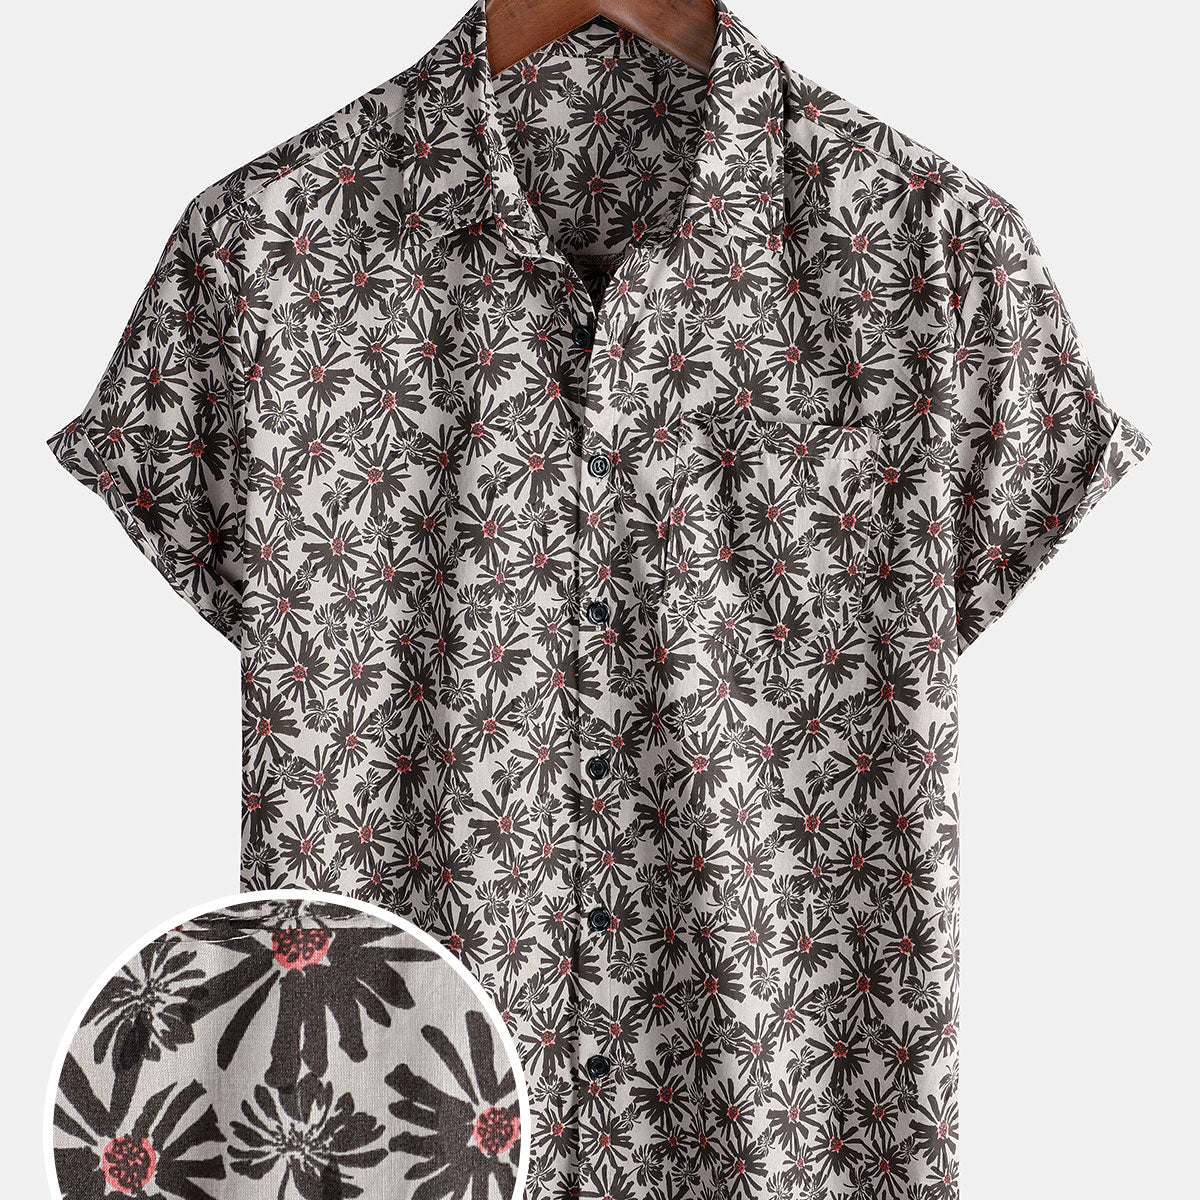 Men's Floral Daisy Pocket Short Sleeve Button Up Cotton Shirt